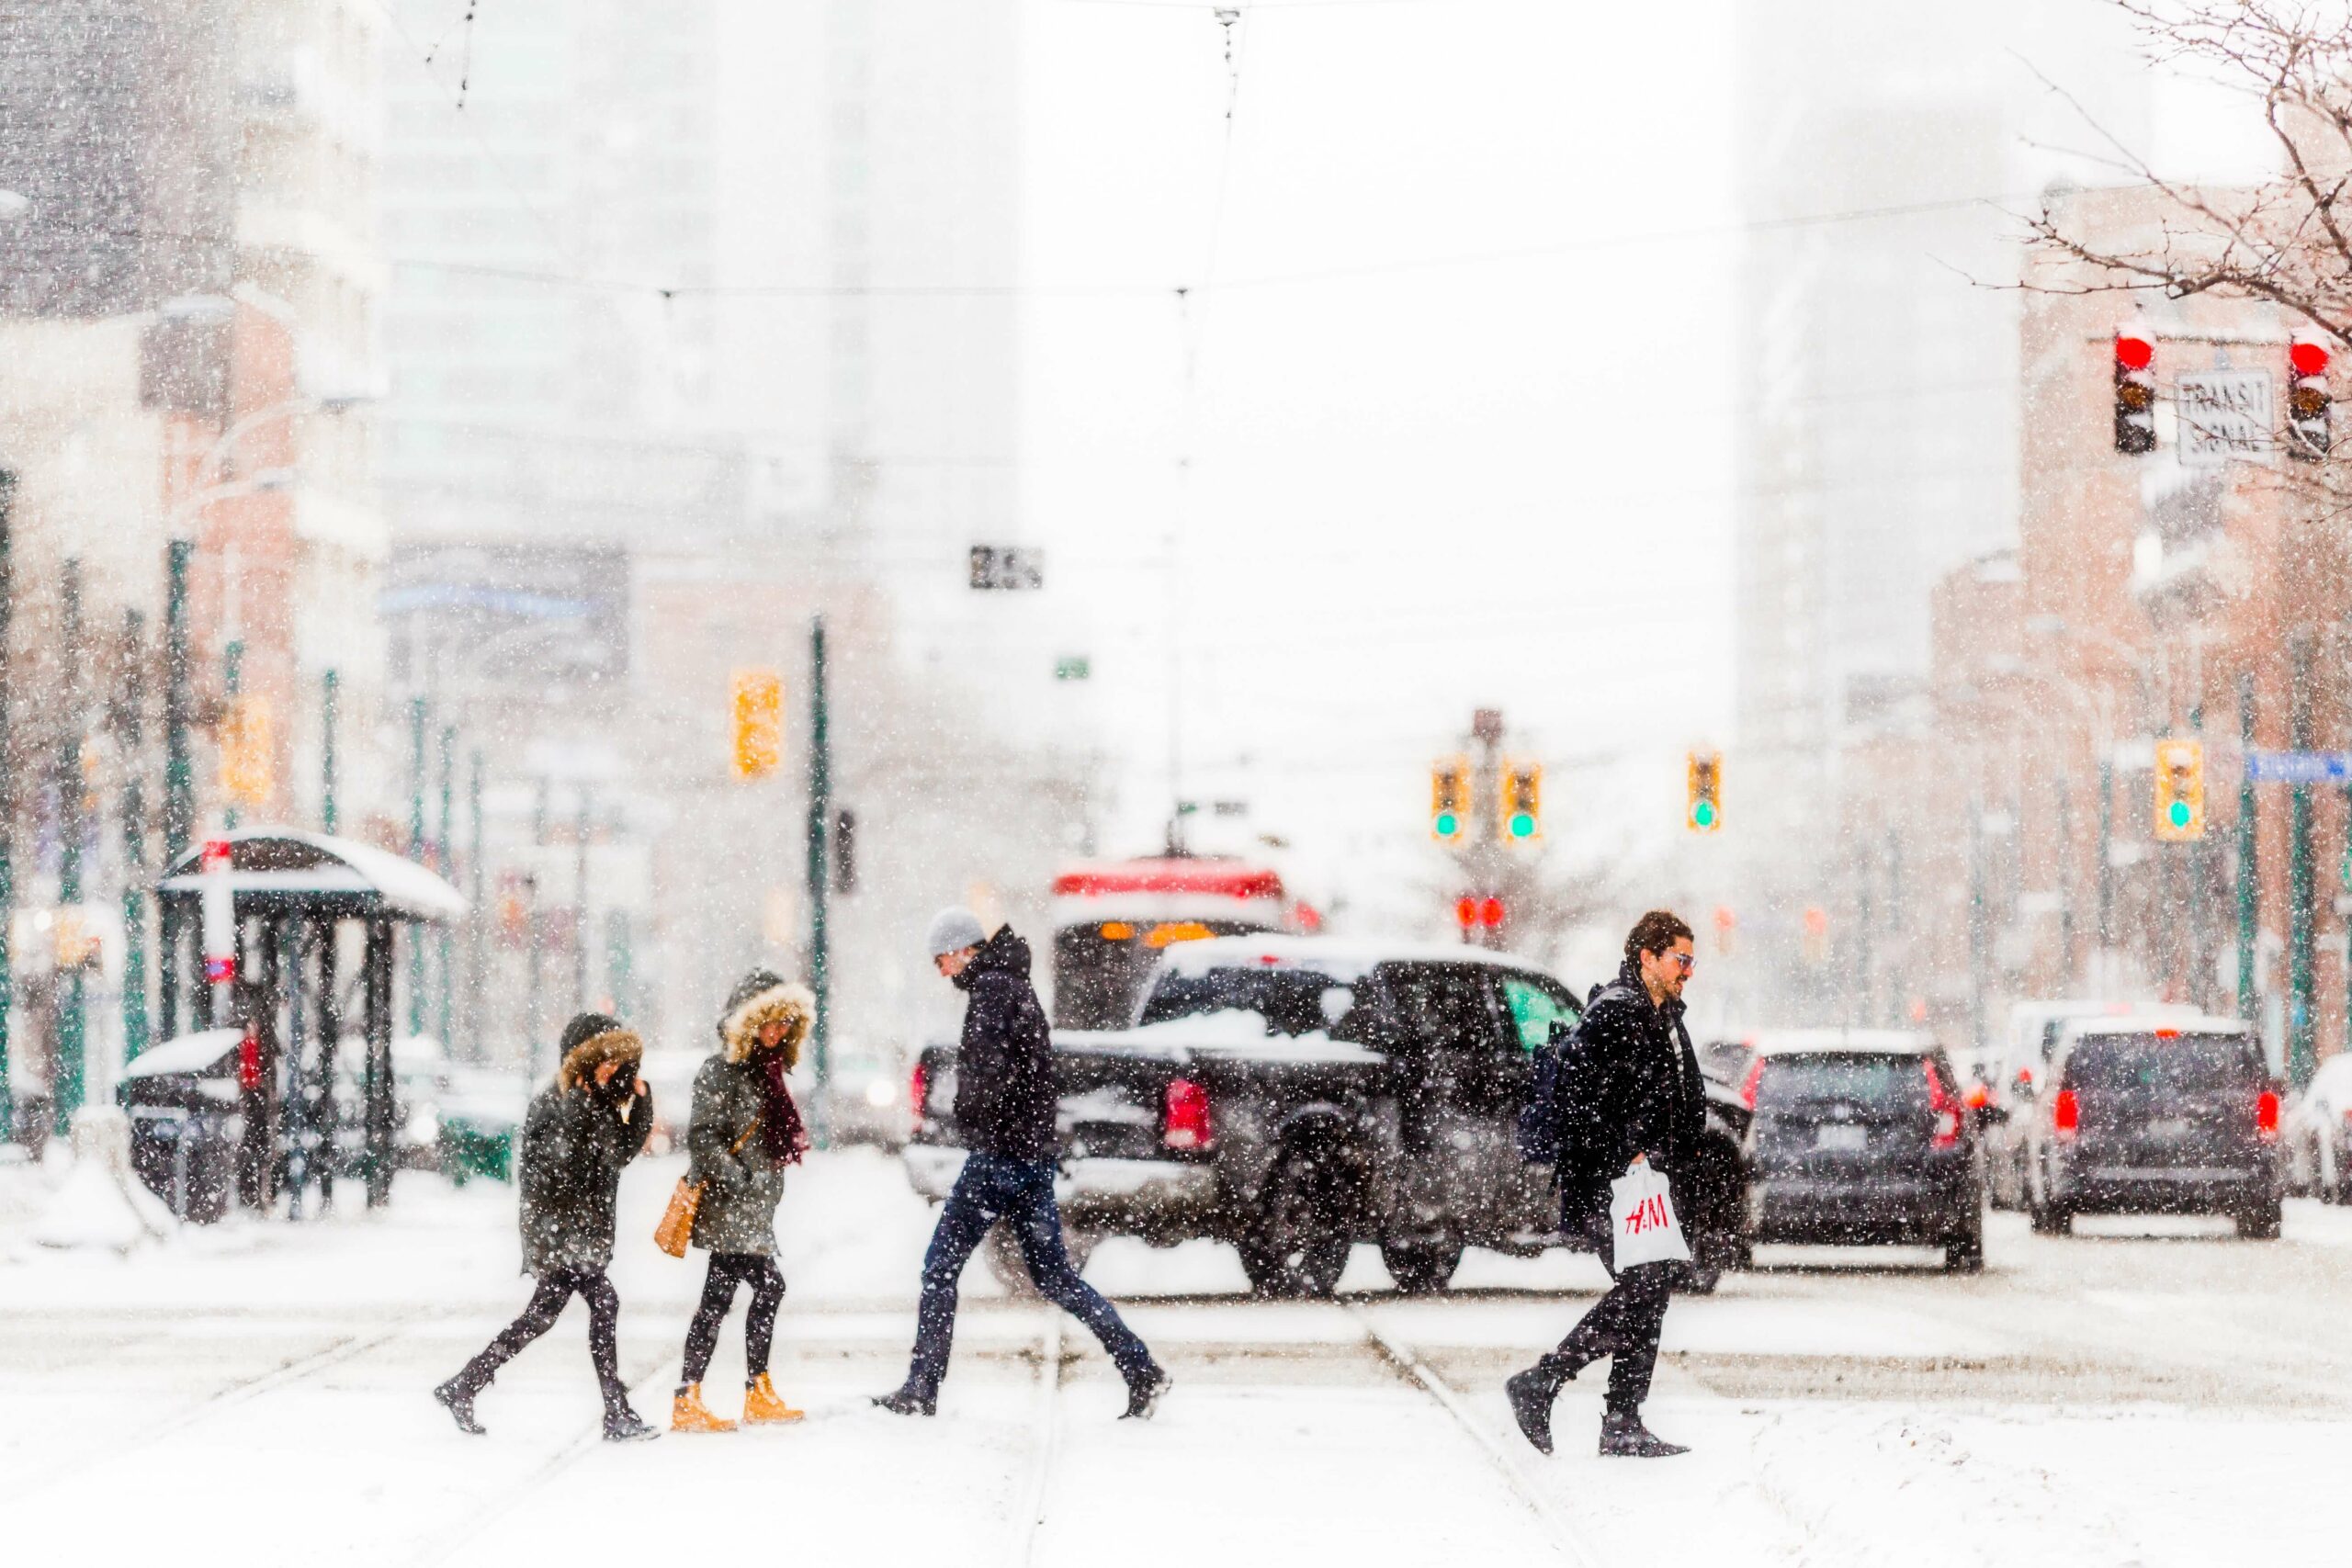 Winter storm set to hit Toronto Friday night - NOW Toronto